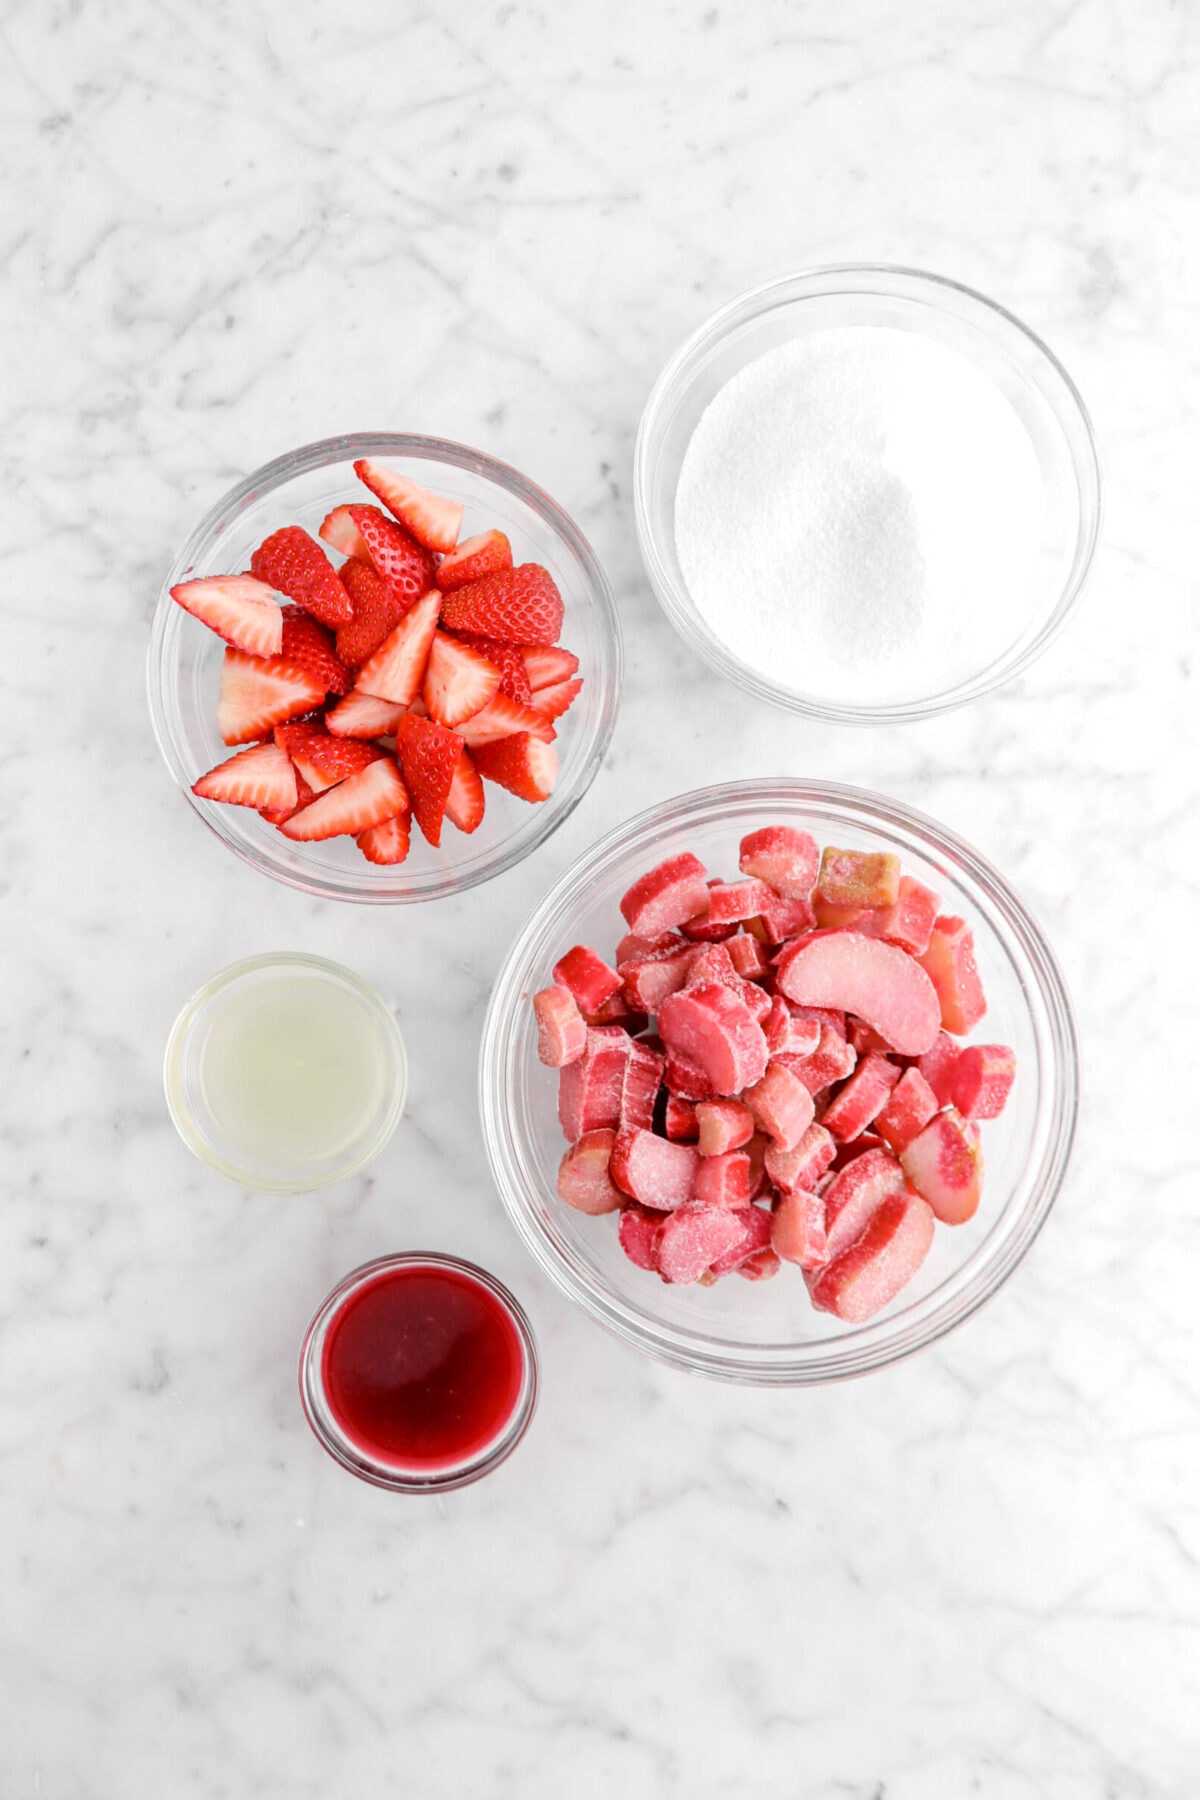 sugar, chopped strawberries, chopped rhubarb, lemon juice, and blood orange juice in glass bowls on marble surface